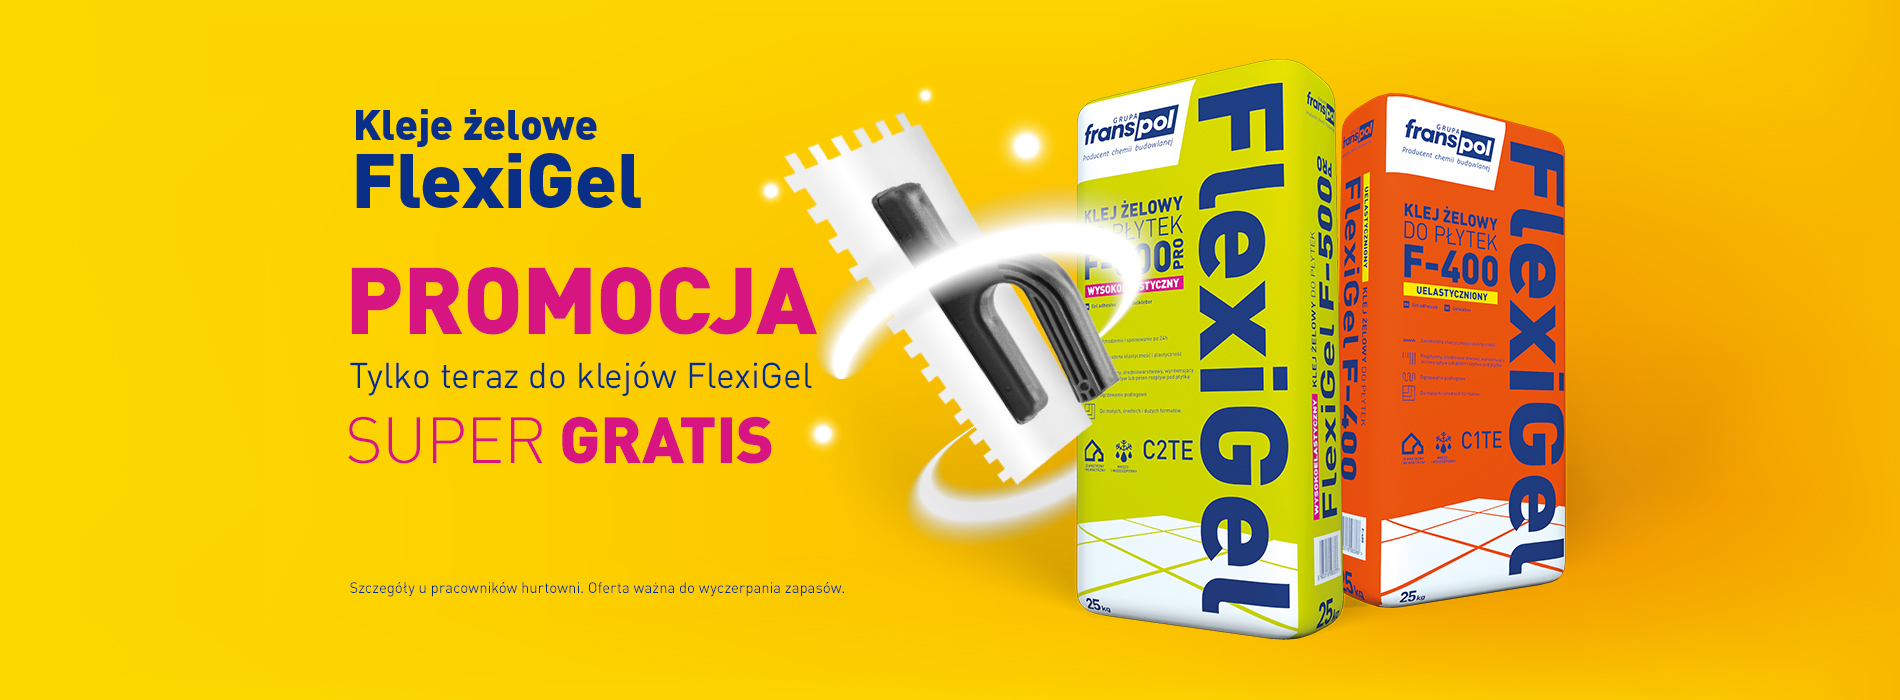 Promocja FlexiGel